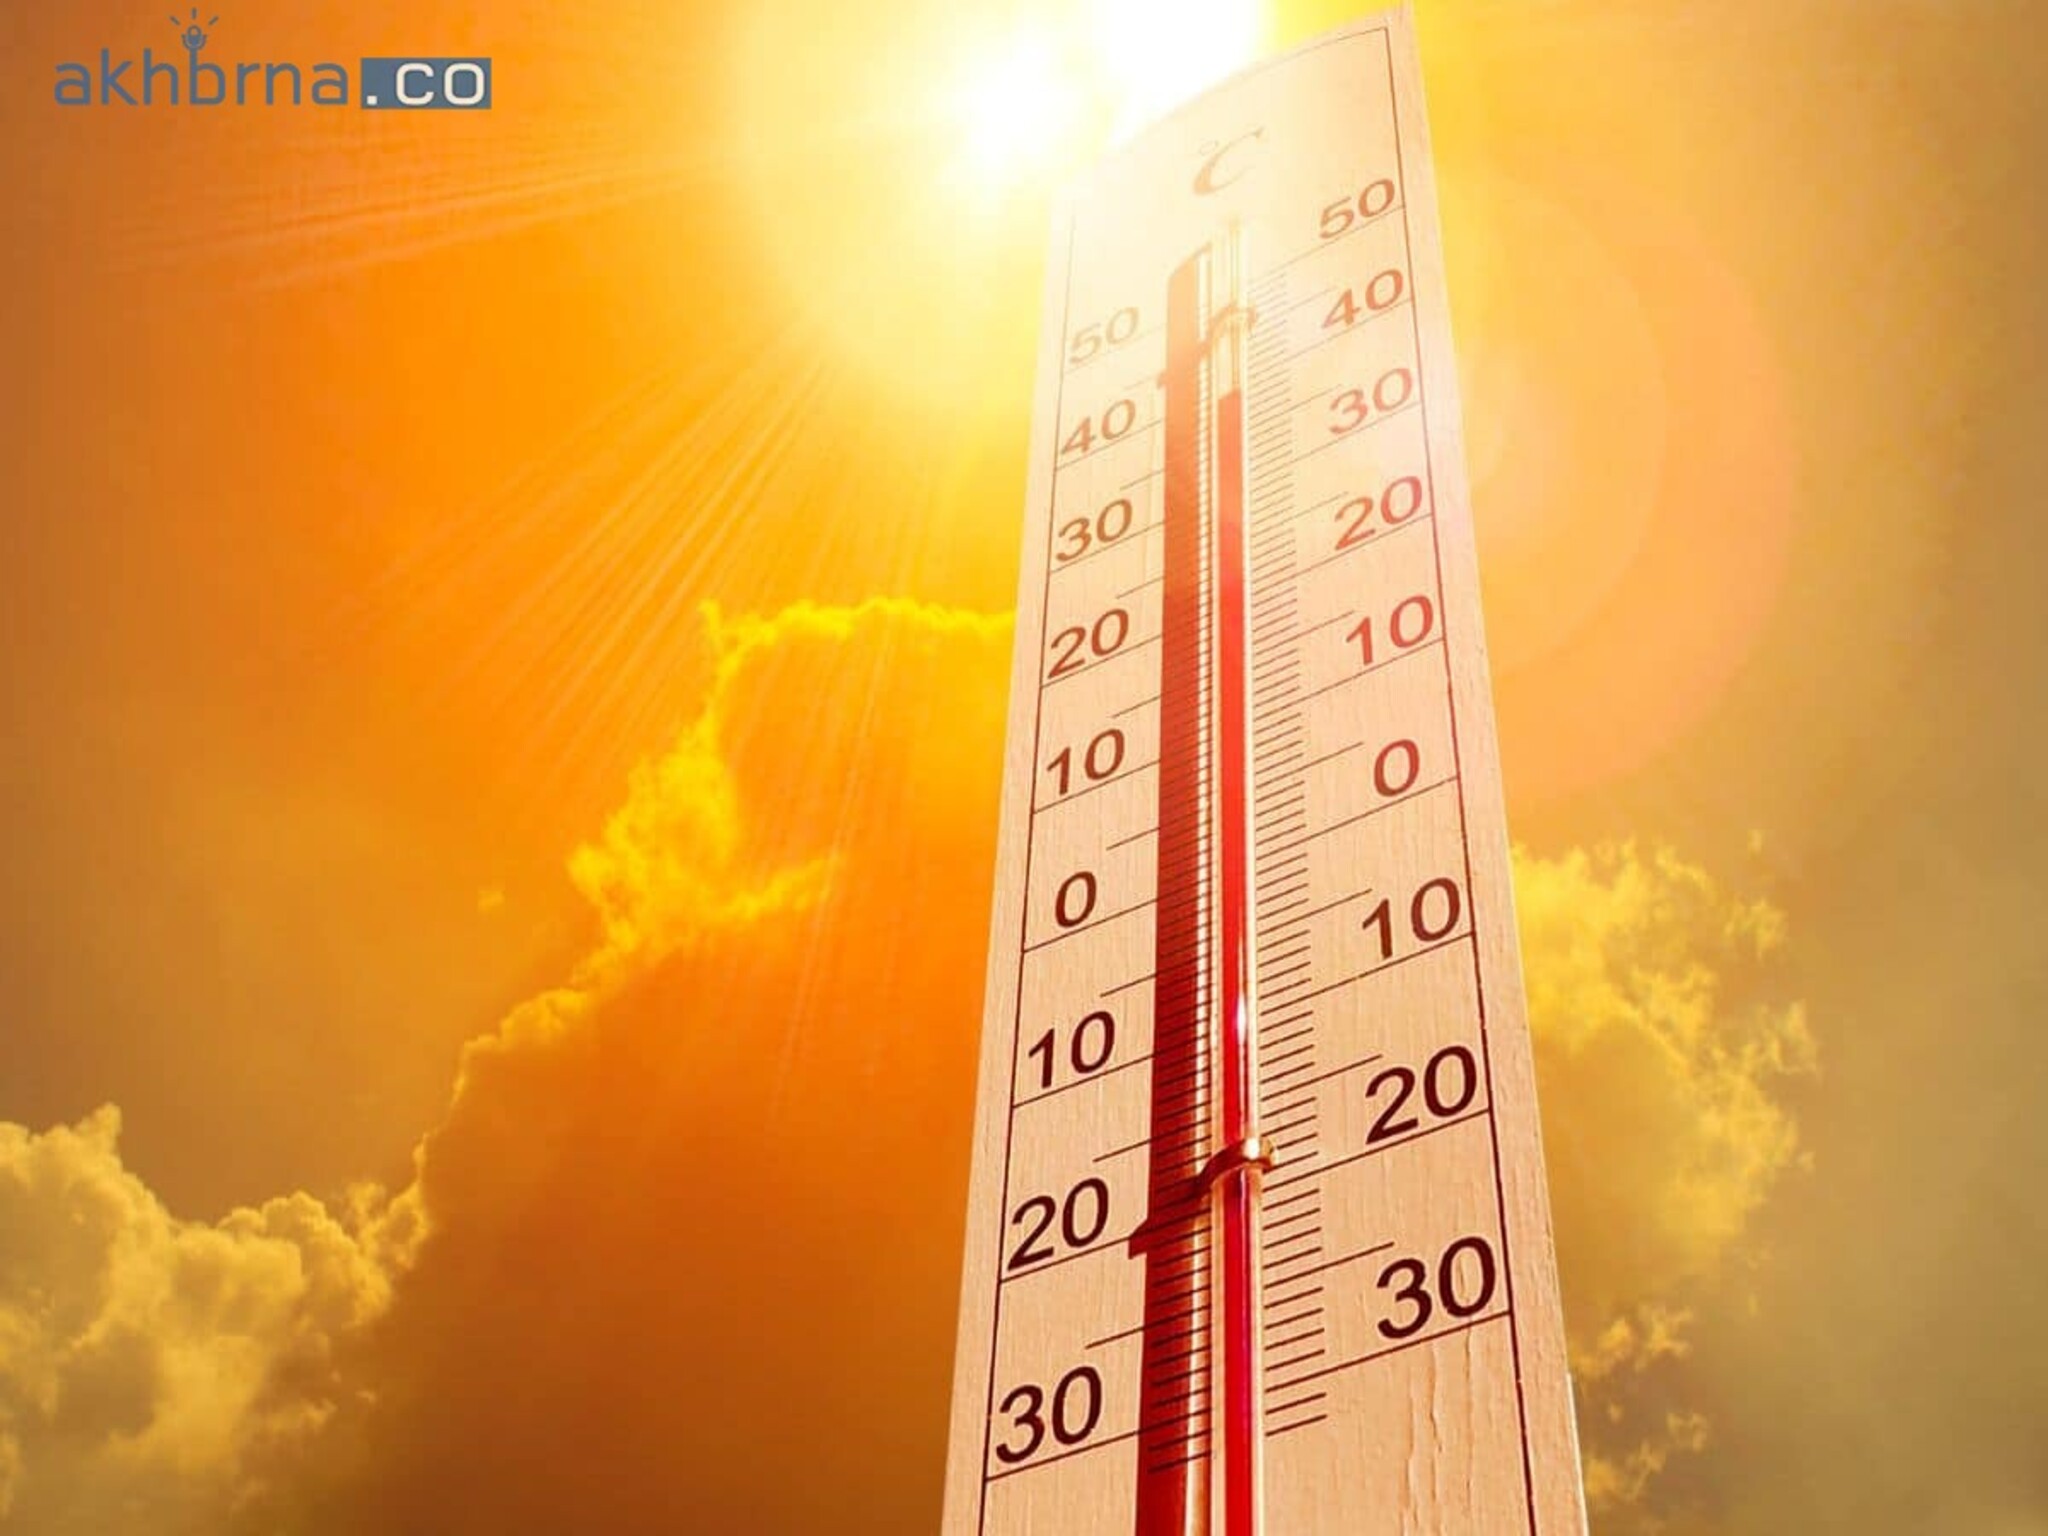 UAE doctors caution against heat exhaustion risks as Temperatures Approach 50°C